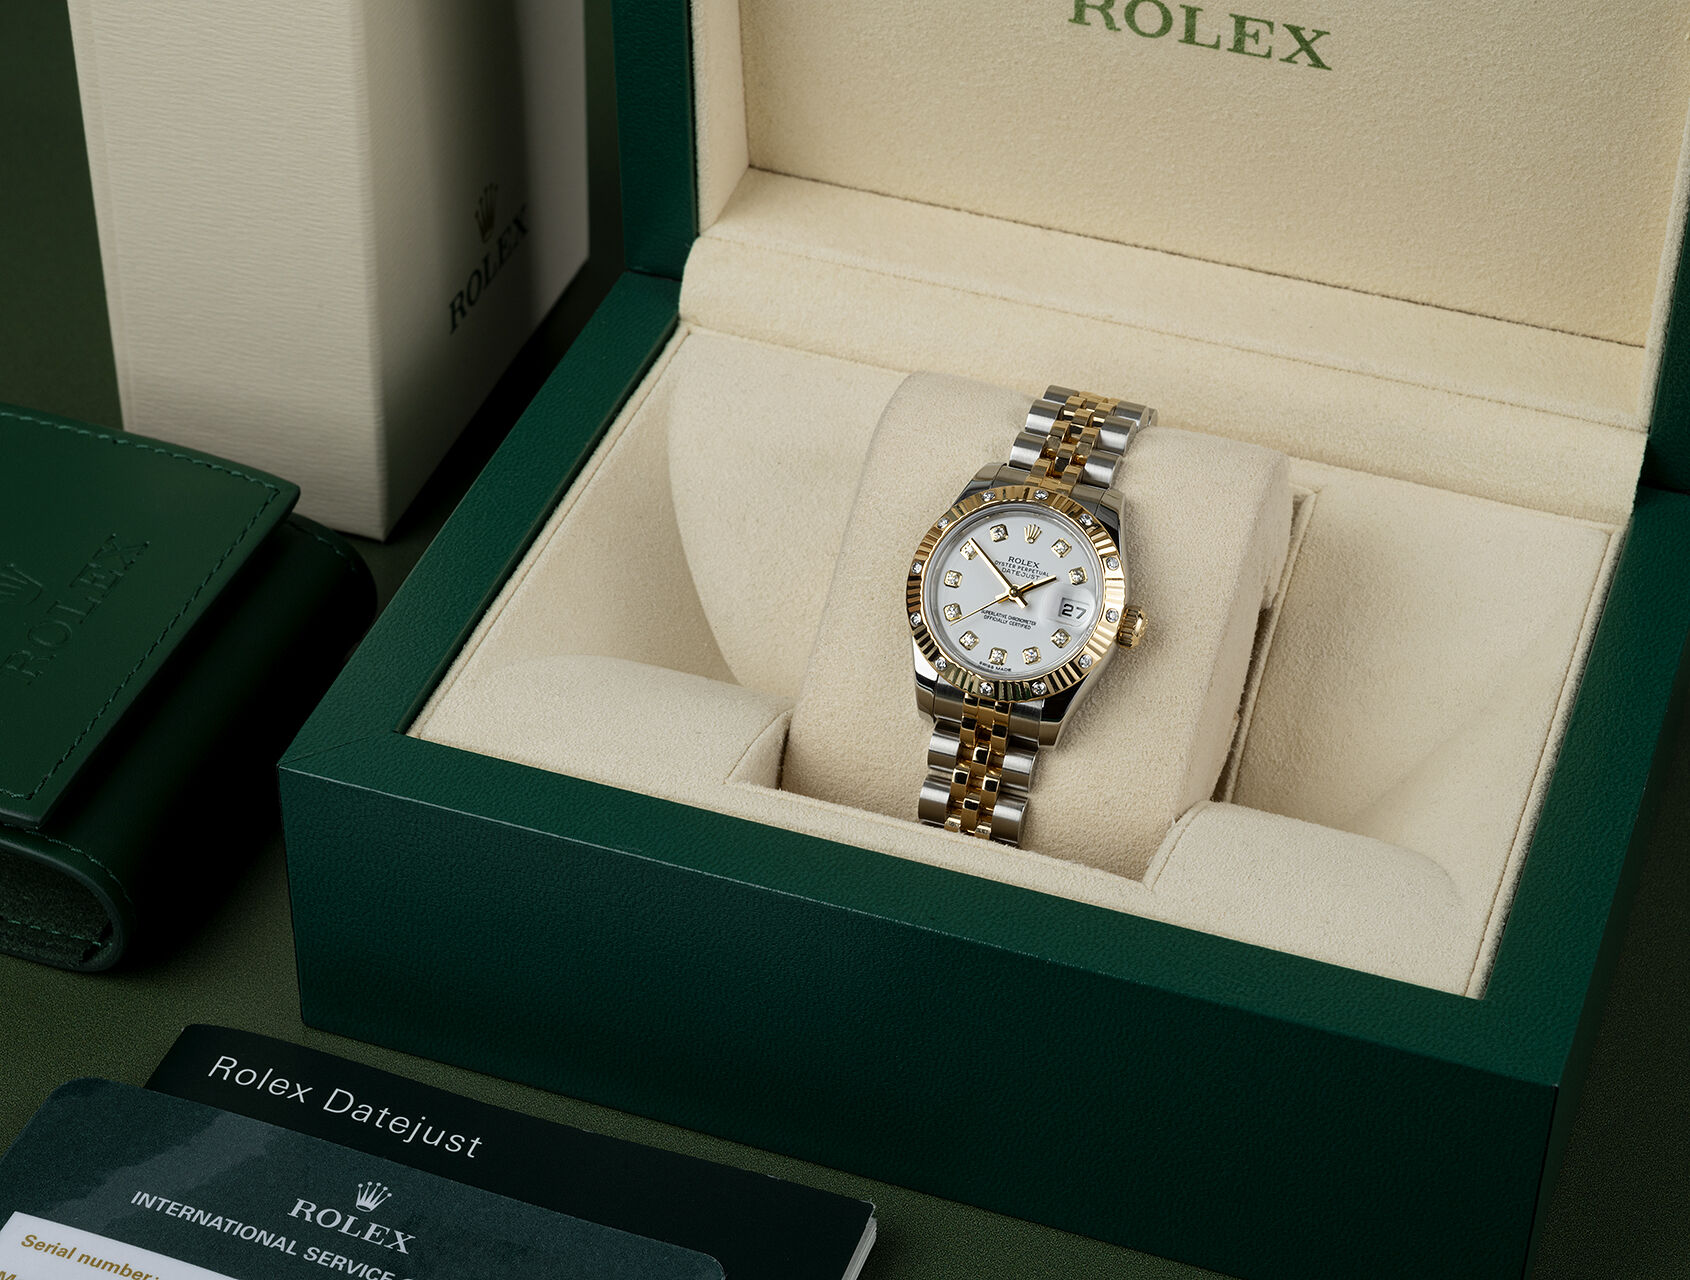 ref 179313 | 179313 - Rolex Service Warranty | Rolex Lady-Datejust